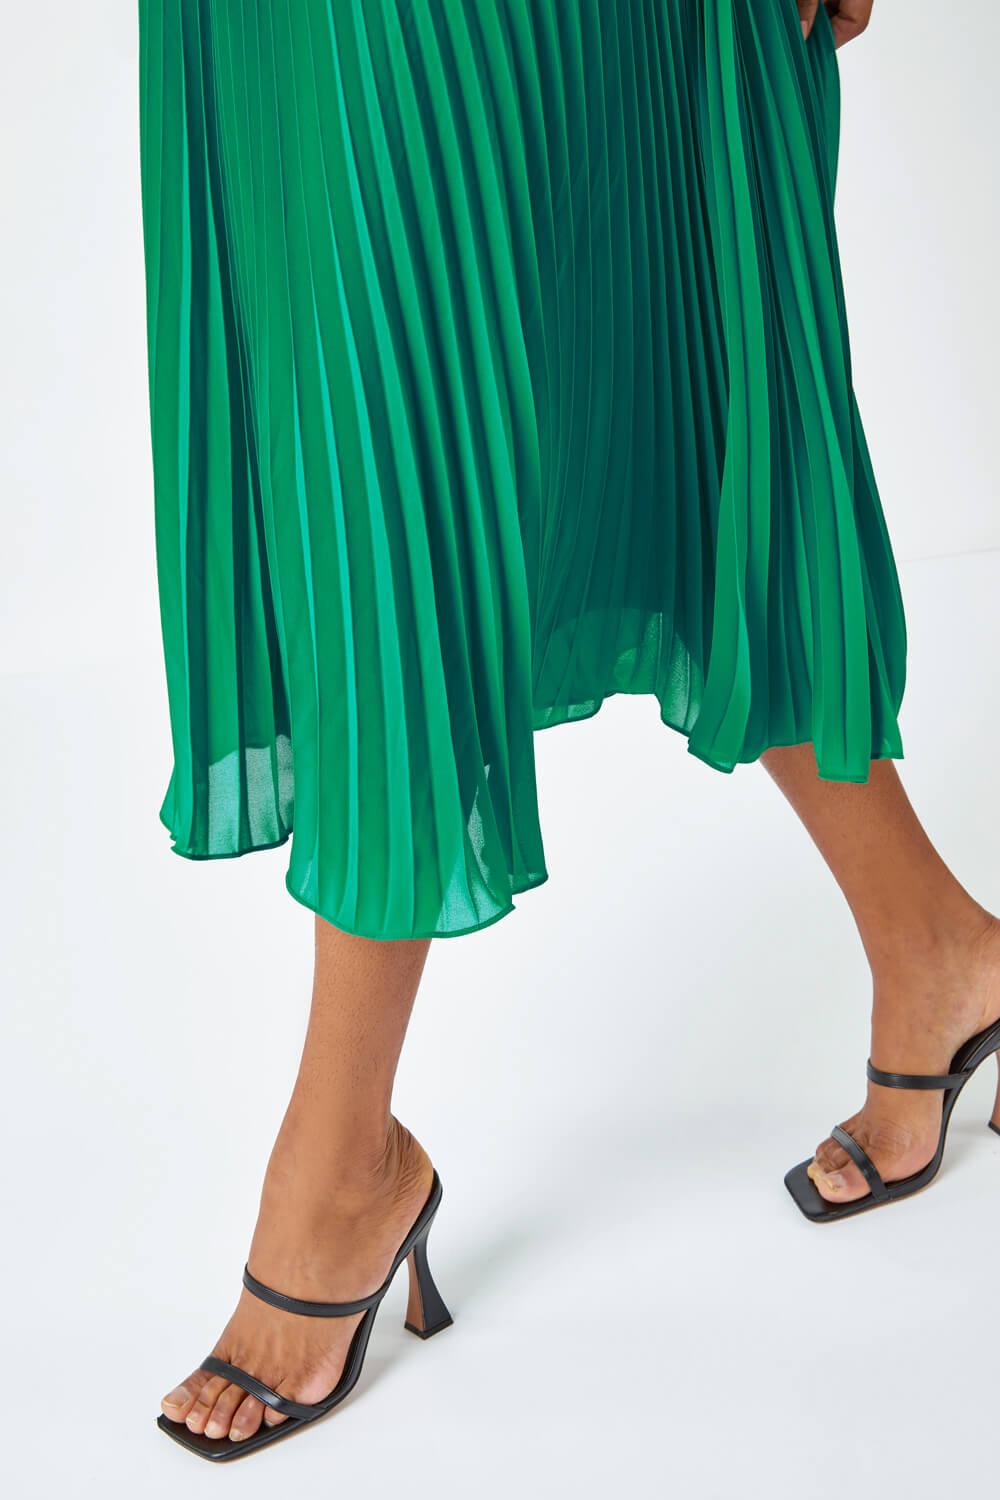 Emerald Lace Top Overlay Pleated Midi Dress | Roman UK